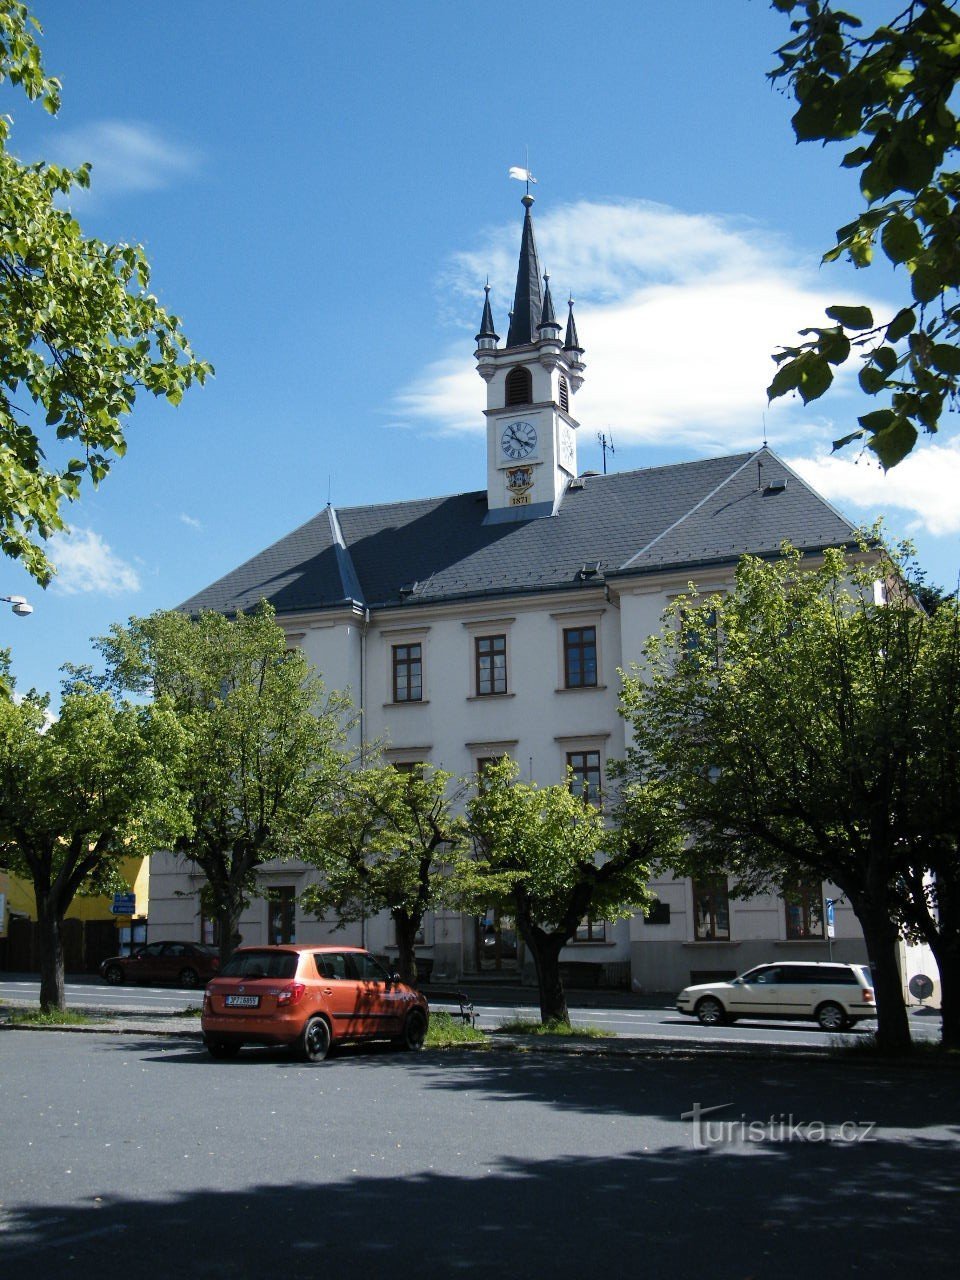 Kdańsk rådhus